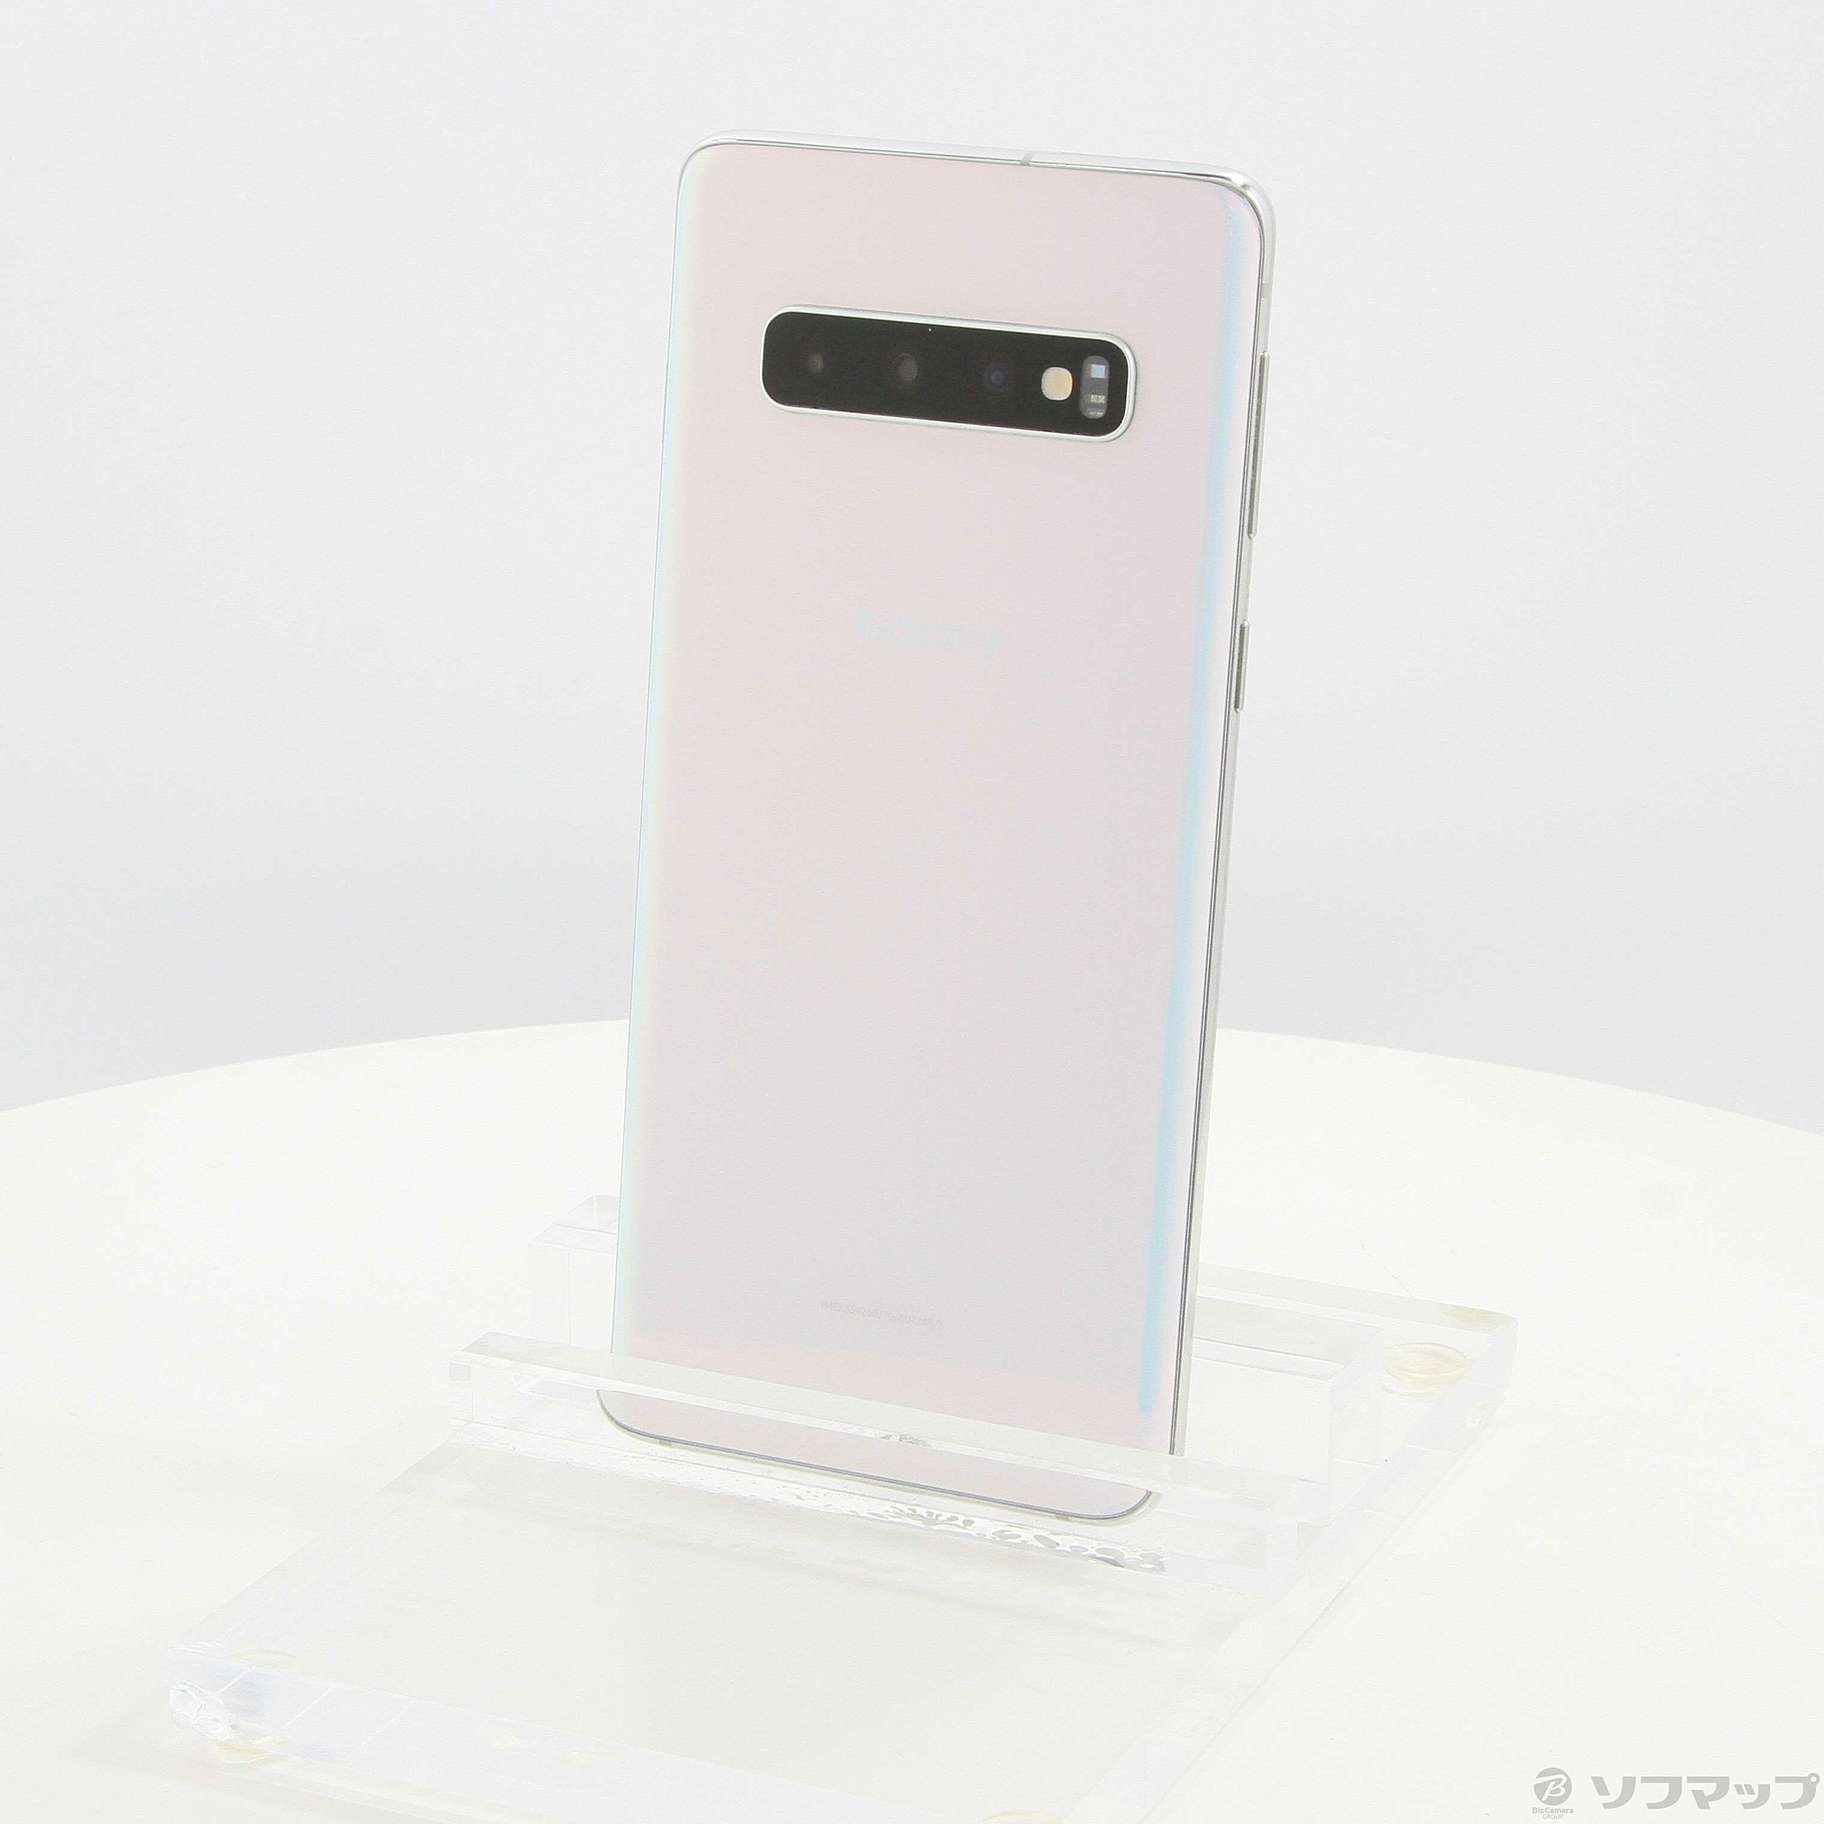 Galaxy S10 Prism White 128 GB SIMフリー 専用品 - スマートフォン本体